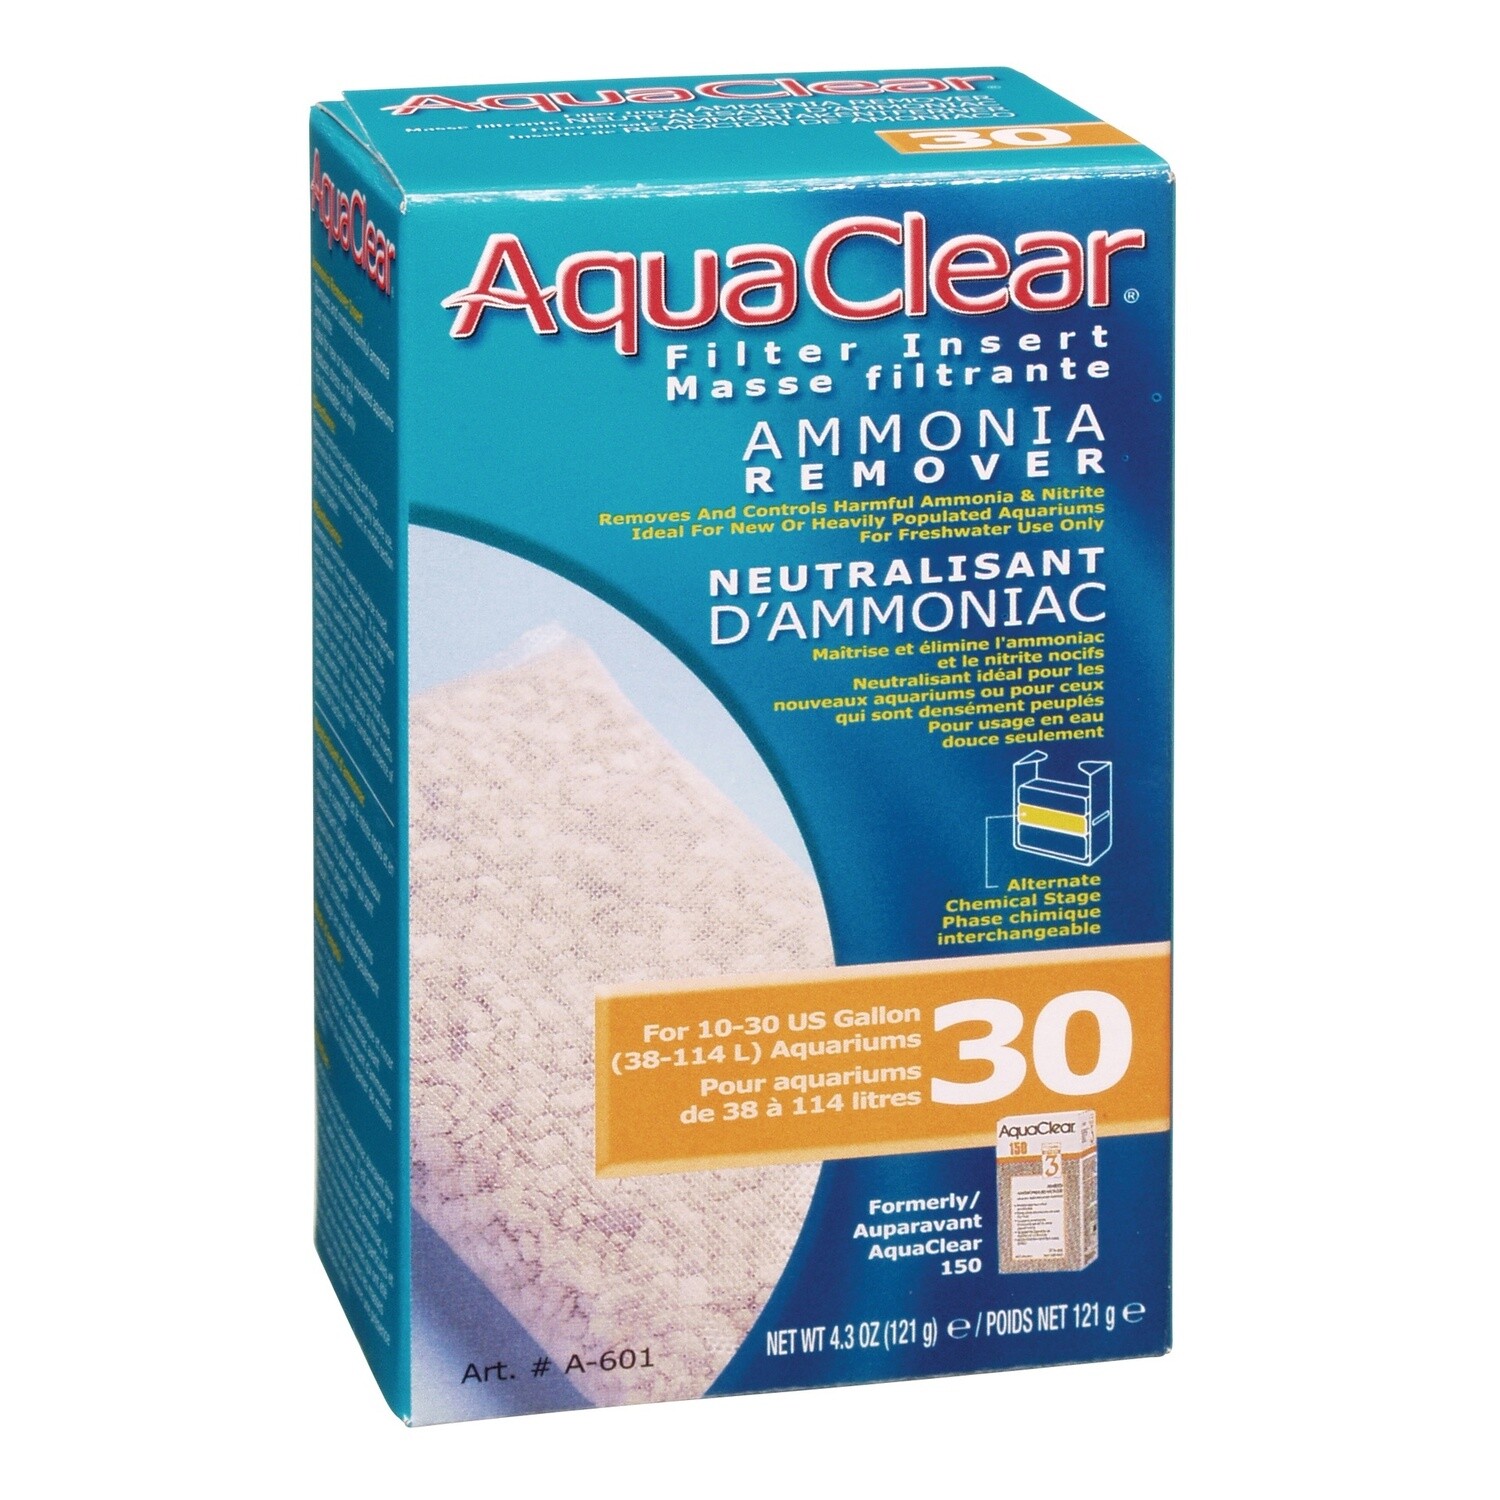 AquaClear 30 Ammonia Remover Filter Insert - 121 g (4.3 oz)